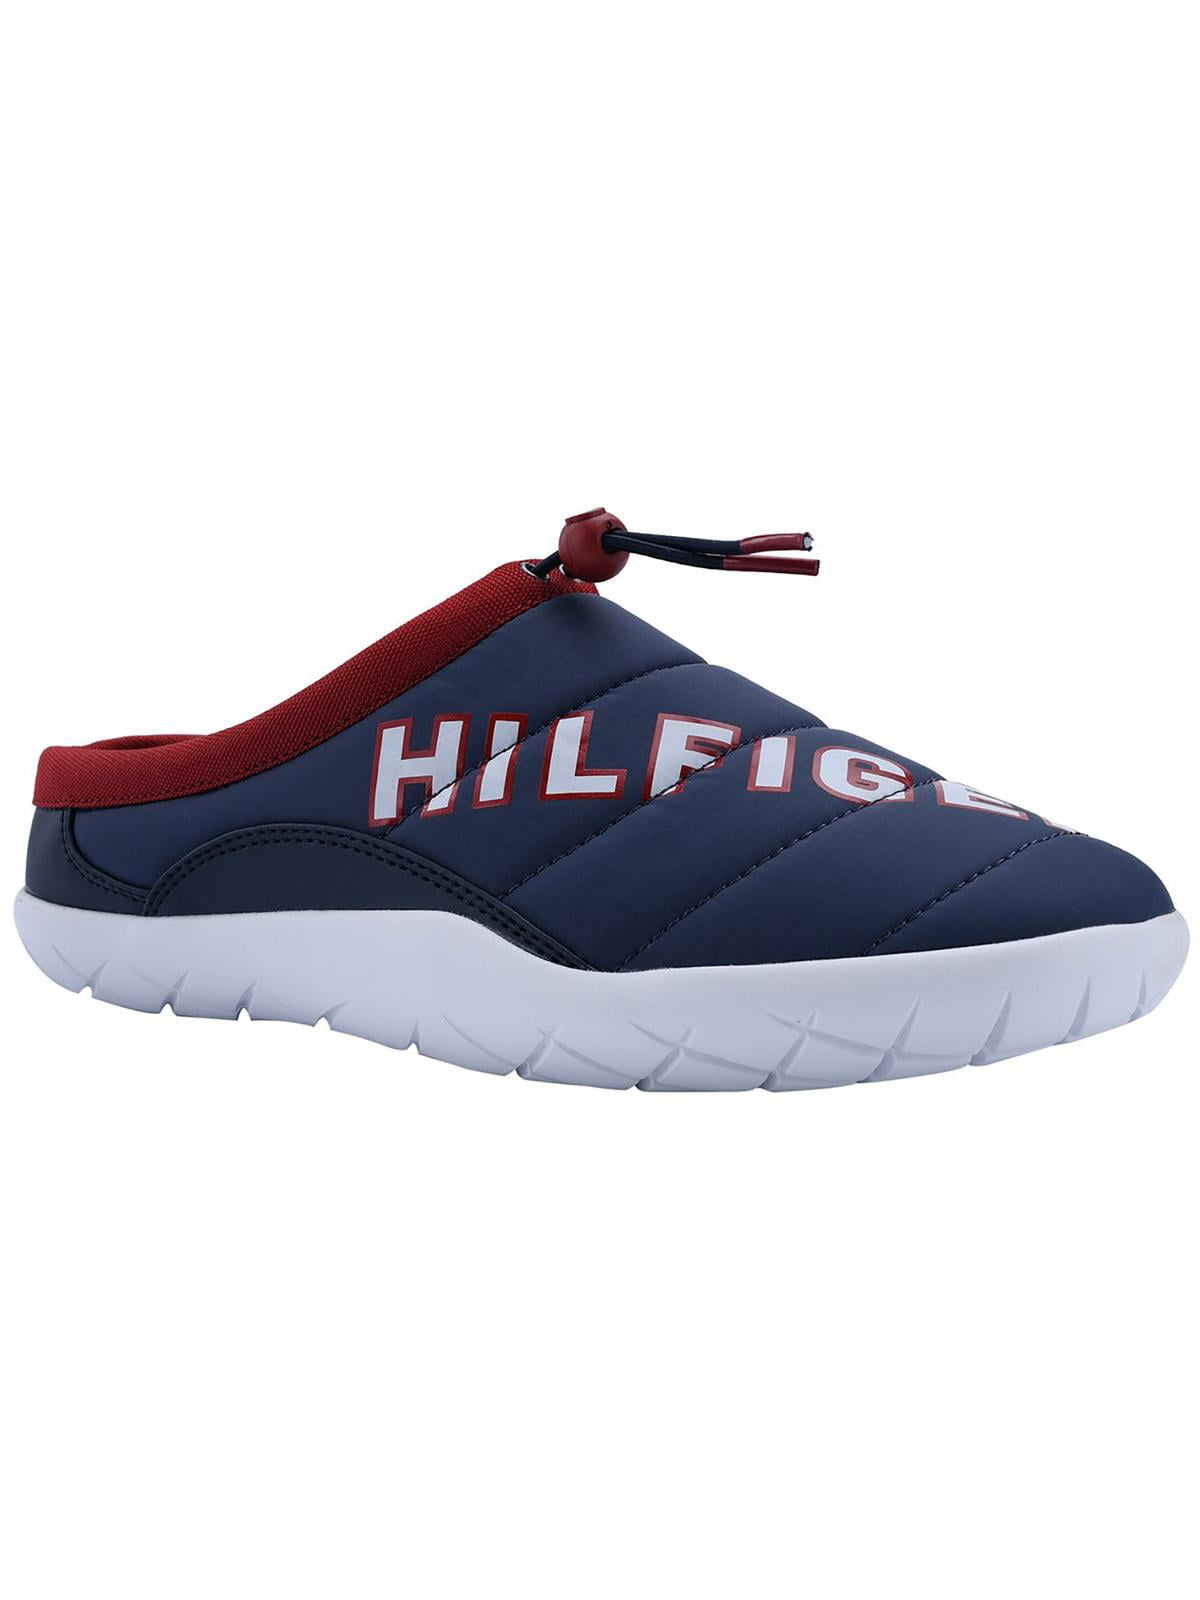 Tommy Hilfiger Teller Puffer Slip-On Sneakers Walmart.com